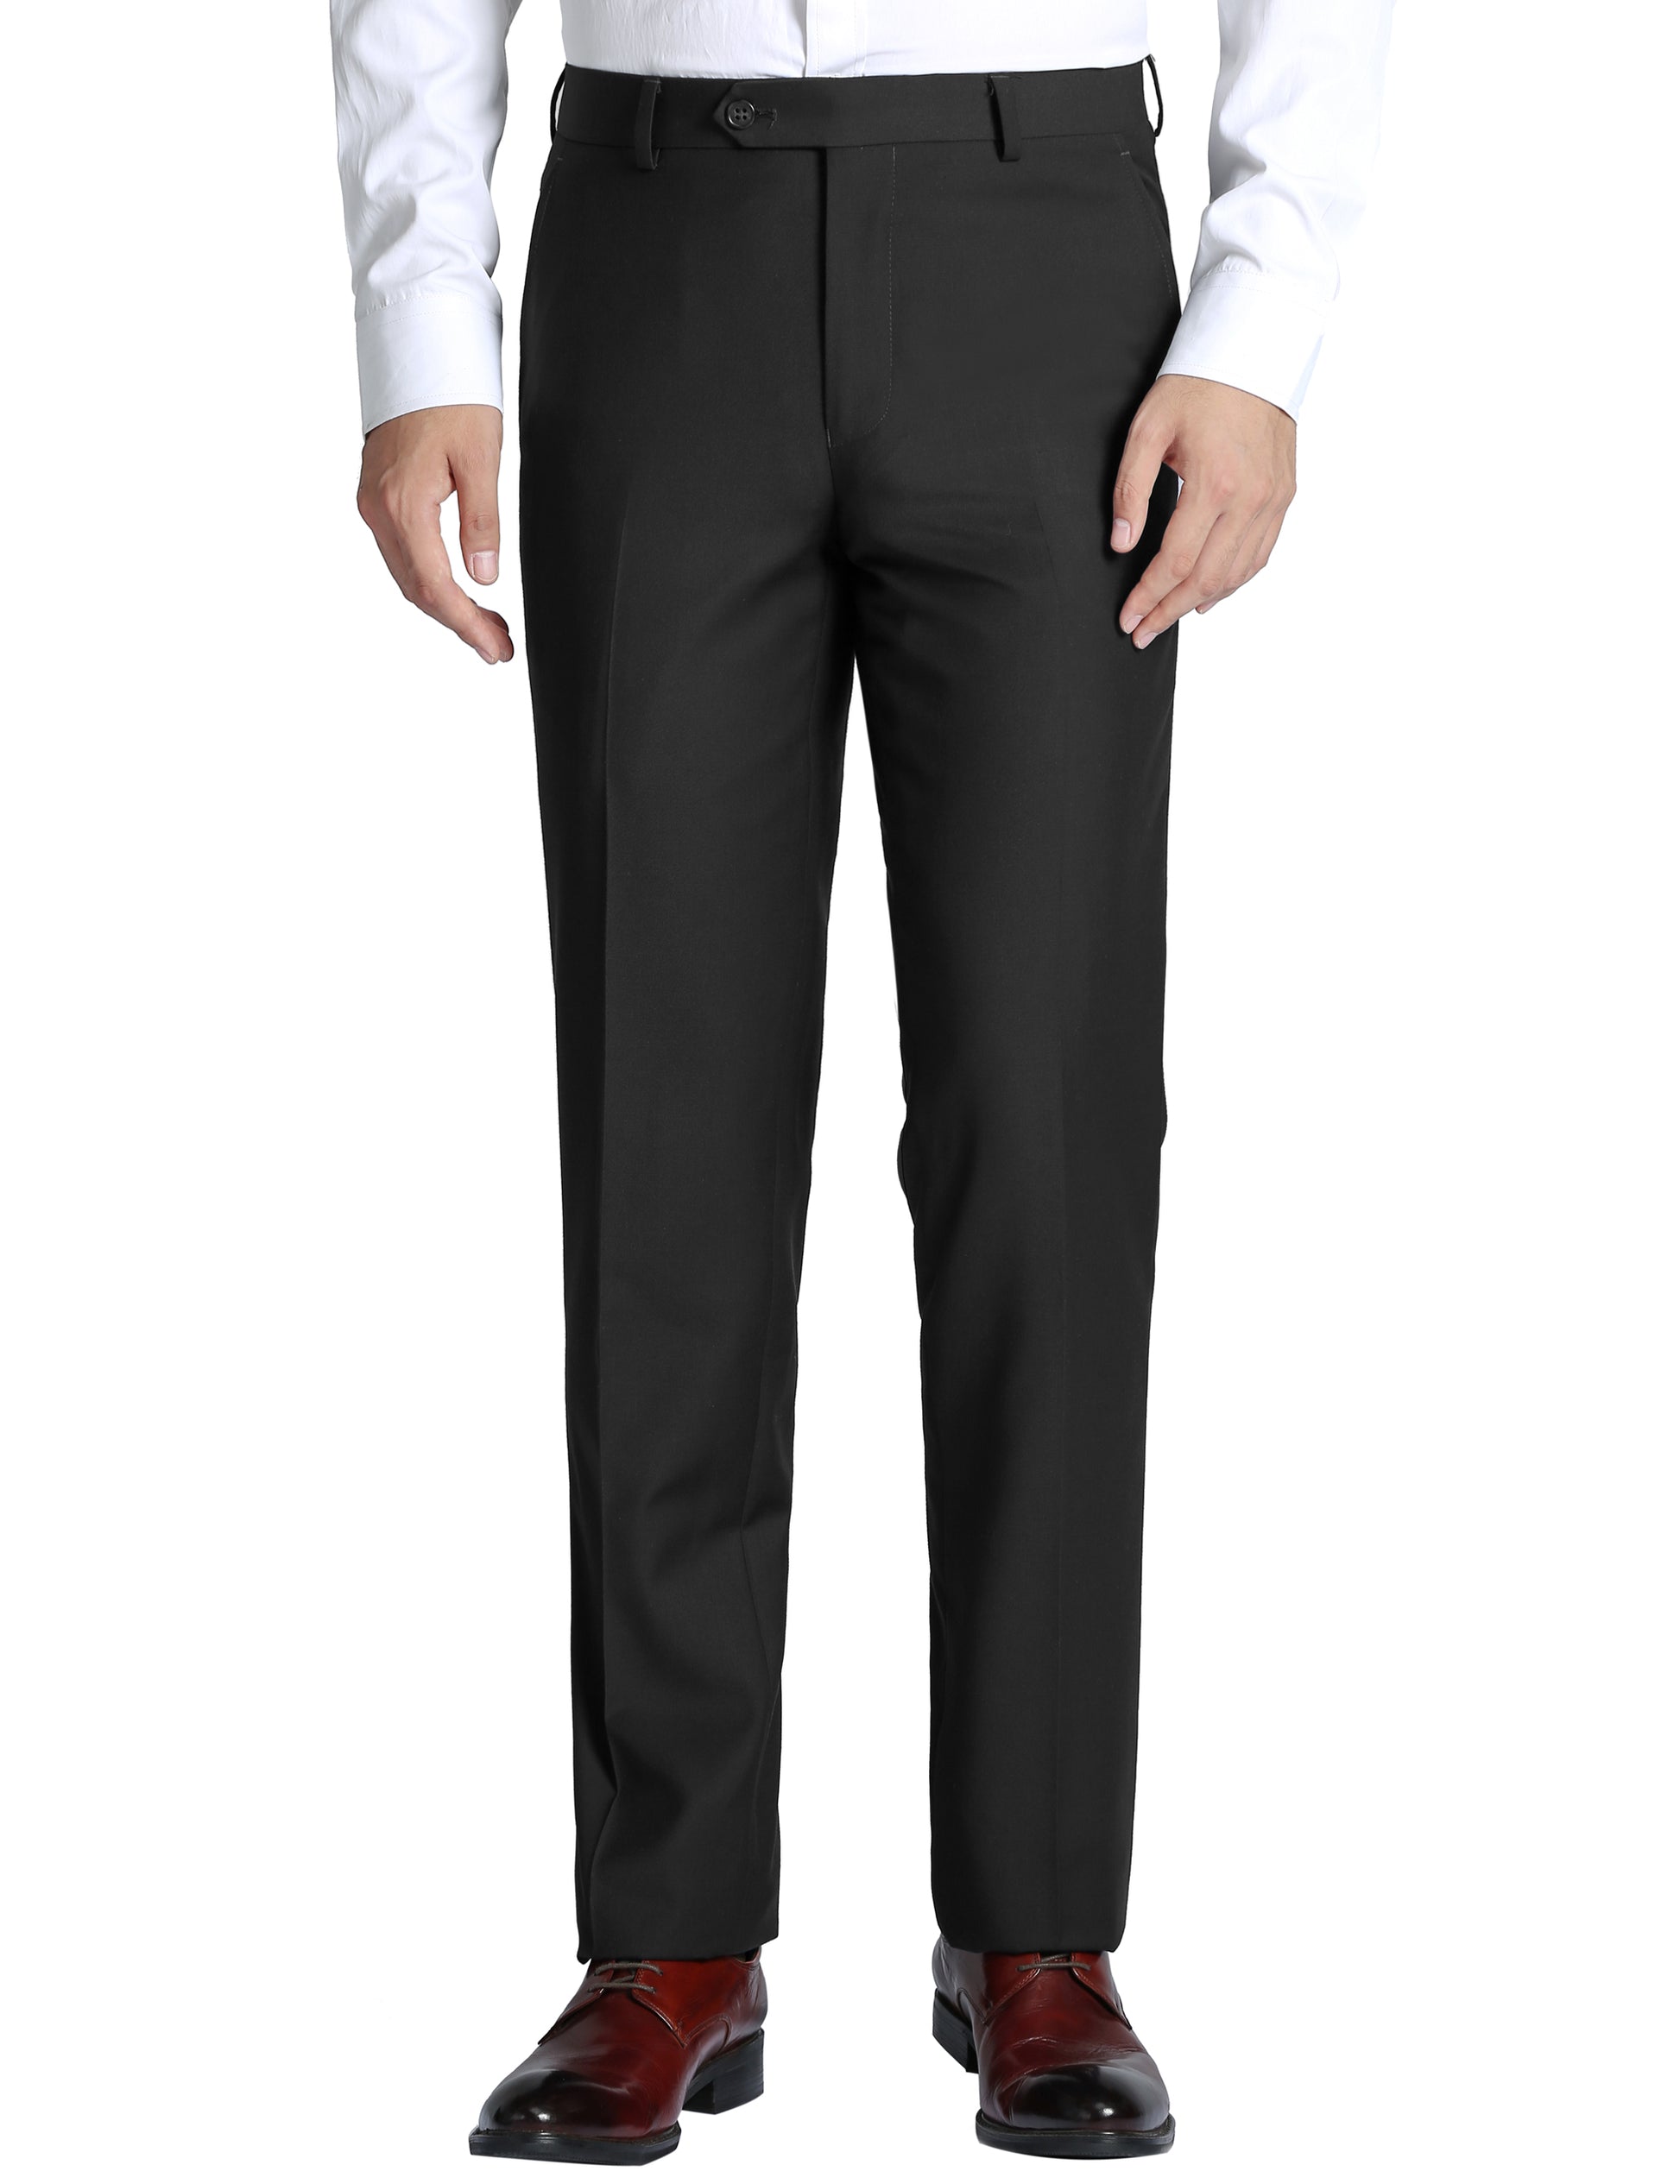 Men's Black Slim Fit Dress Pants – OMC Formal